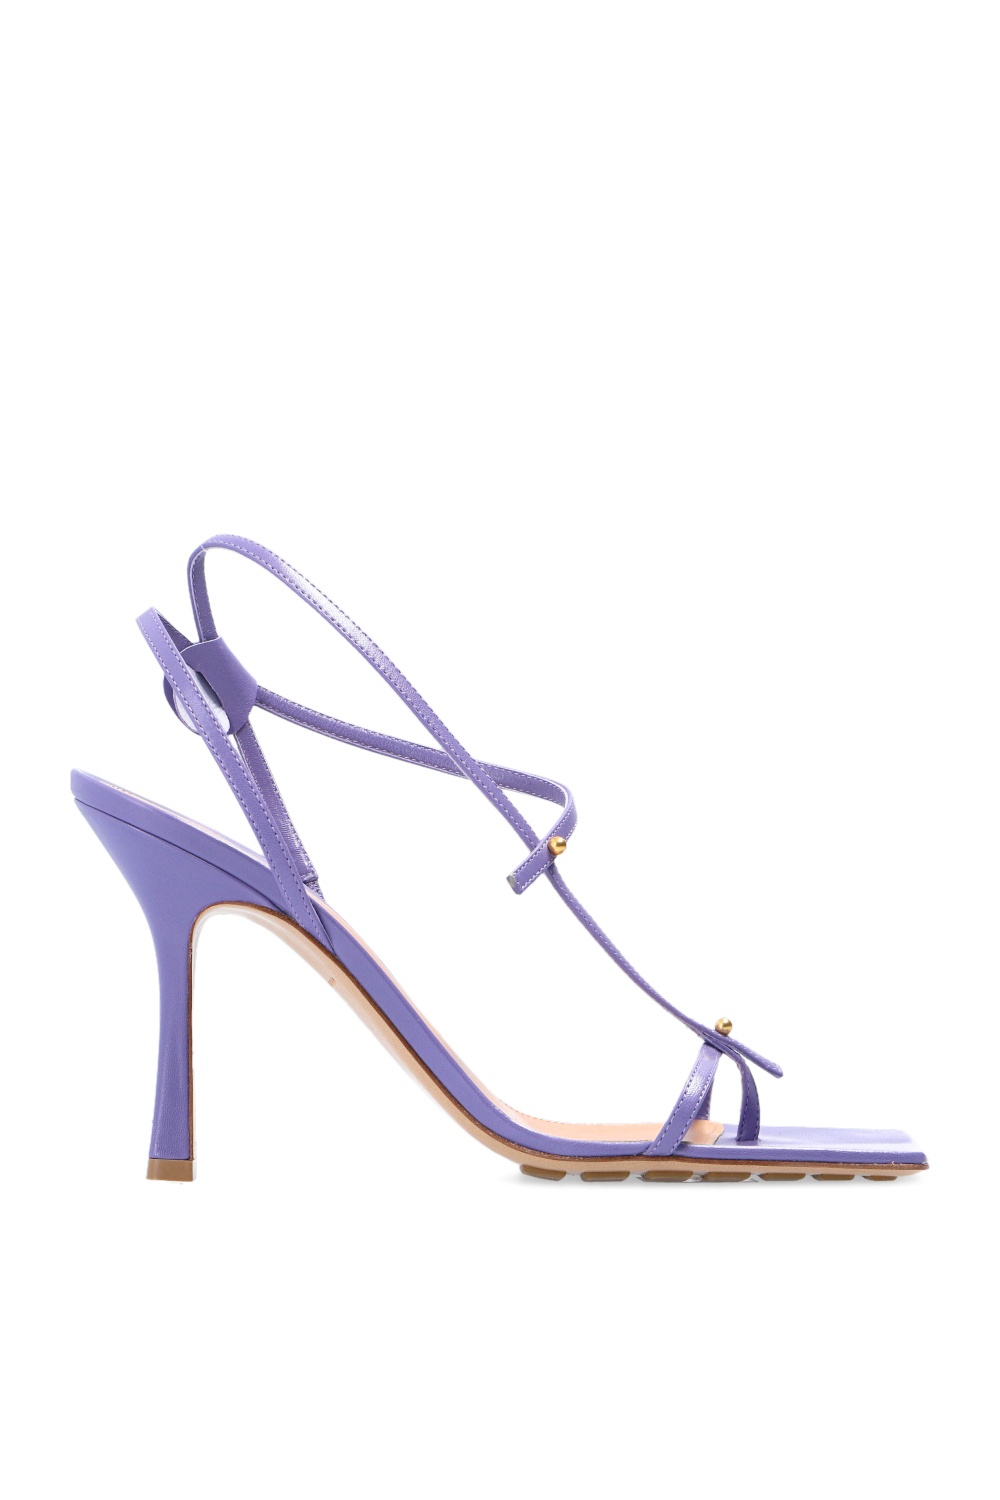 bottega sandal Veneta ‘Stretch’ heeled sandals